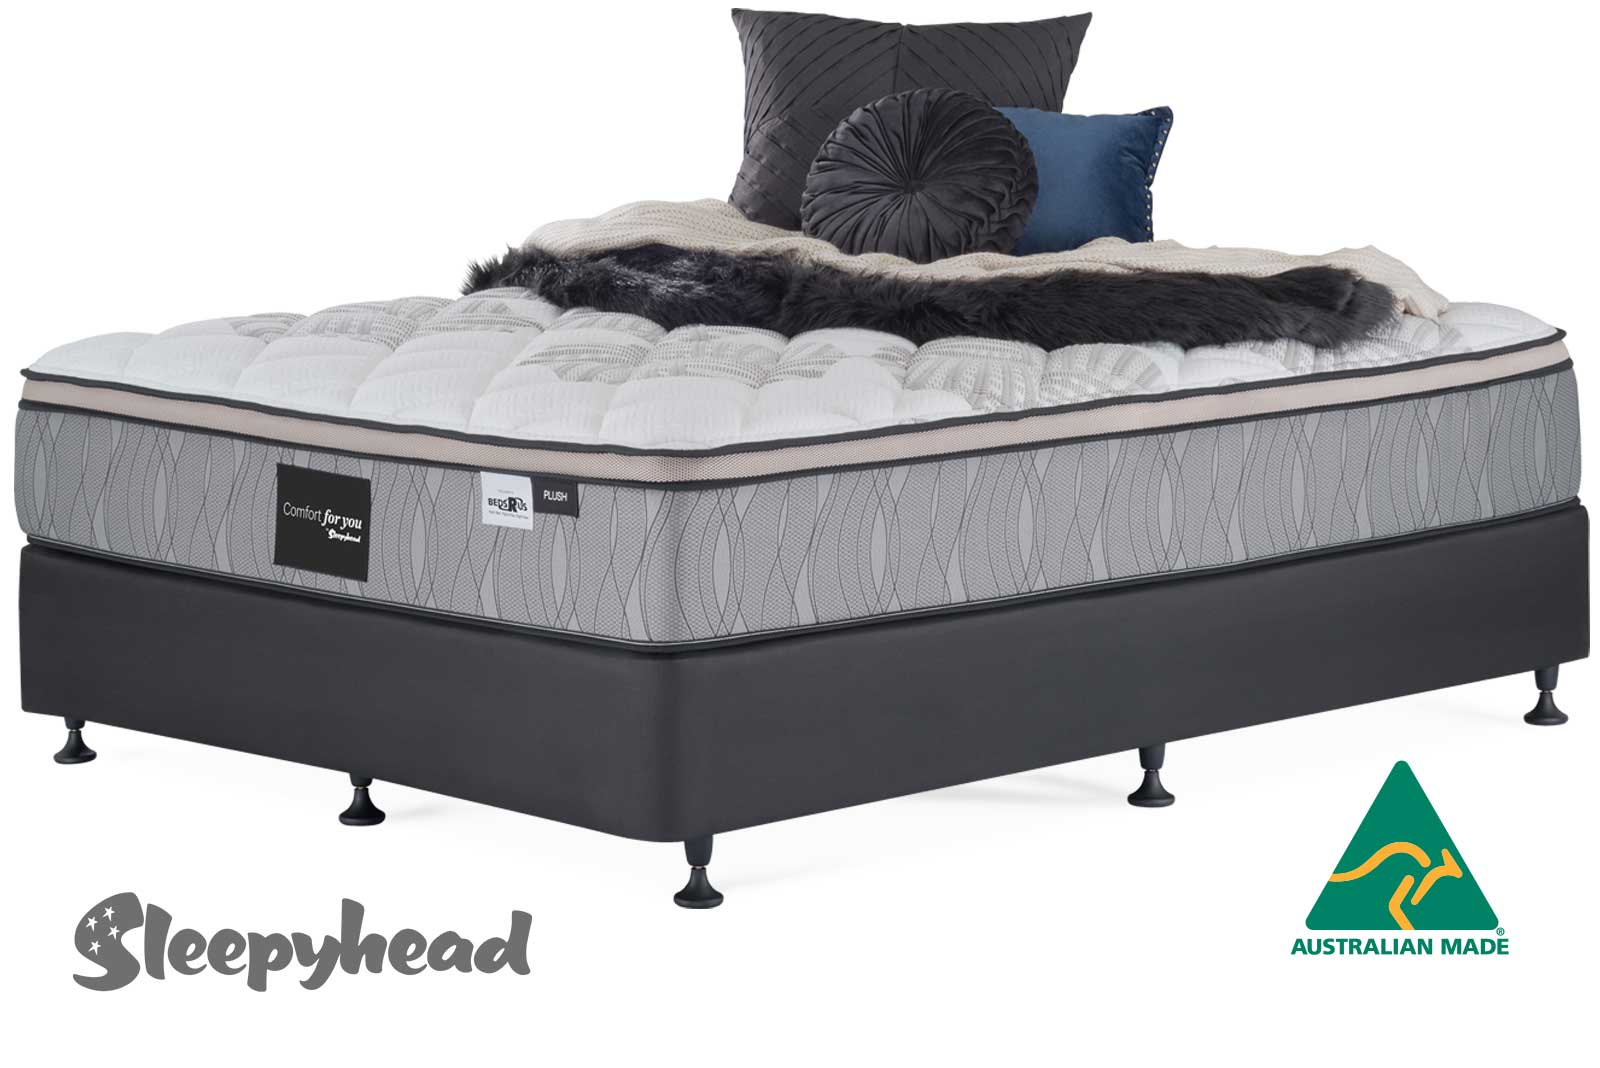 comfort for you ultra plush mattress